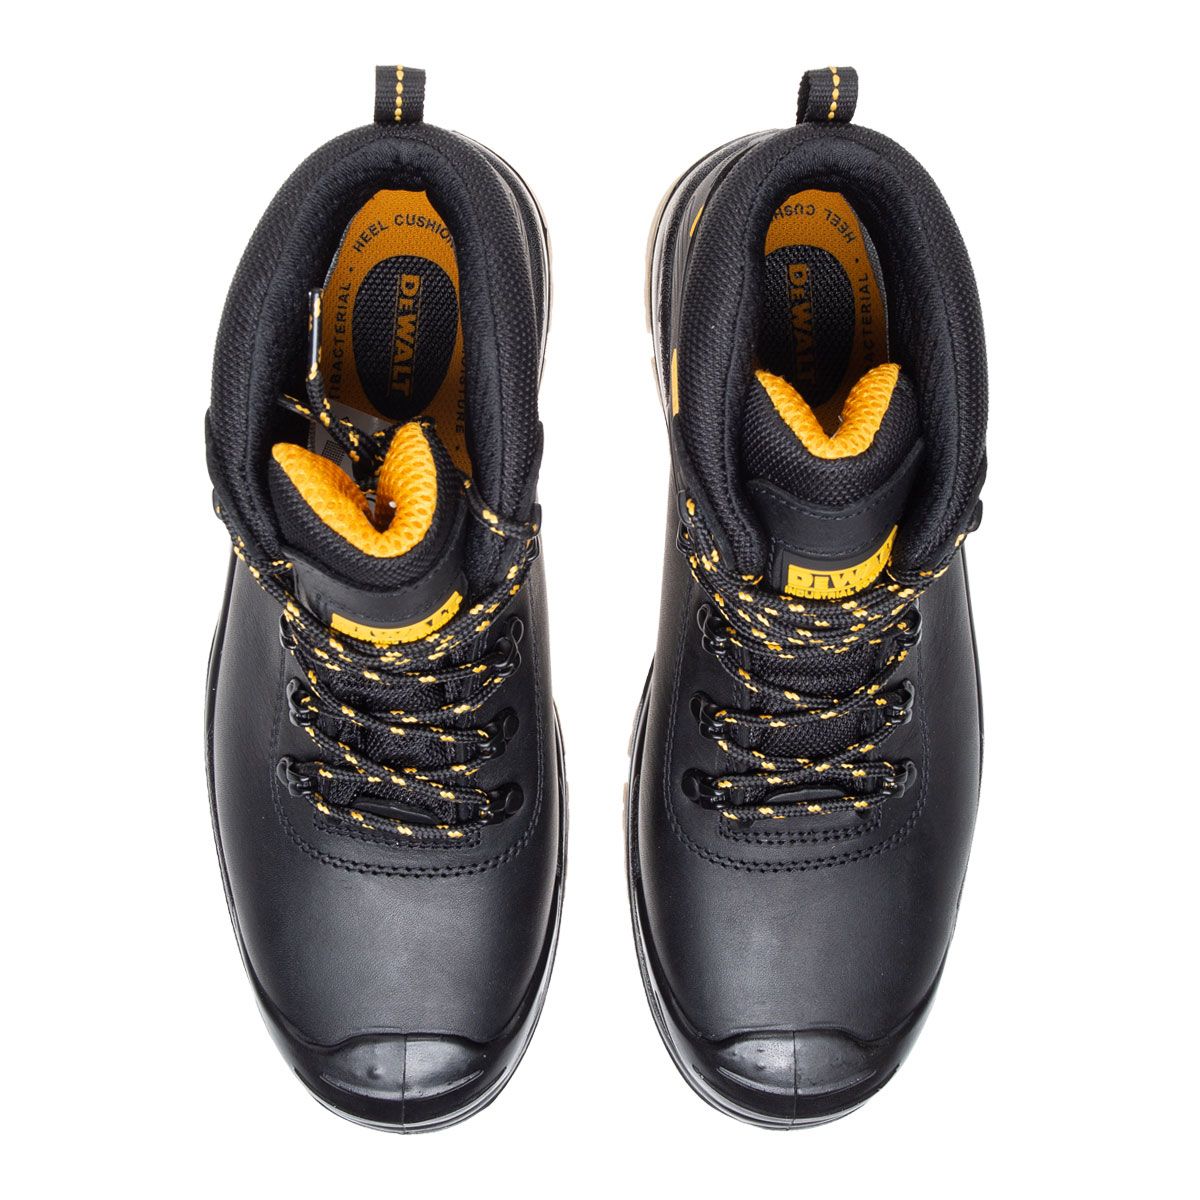 DeWalt Newark Men's Black Safety boots, Size 9